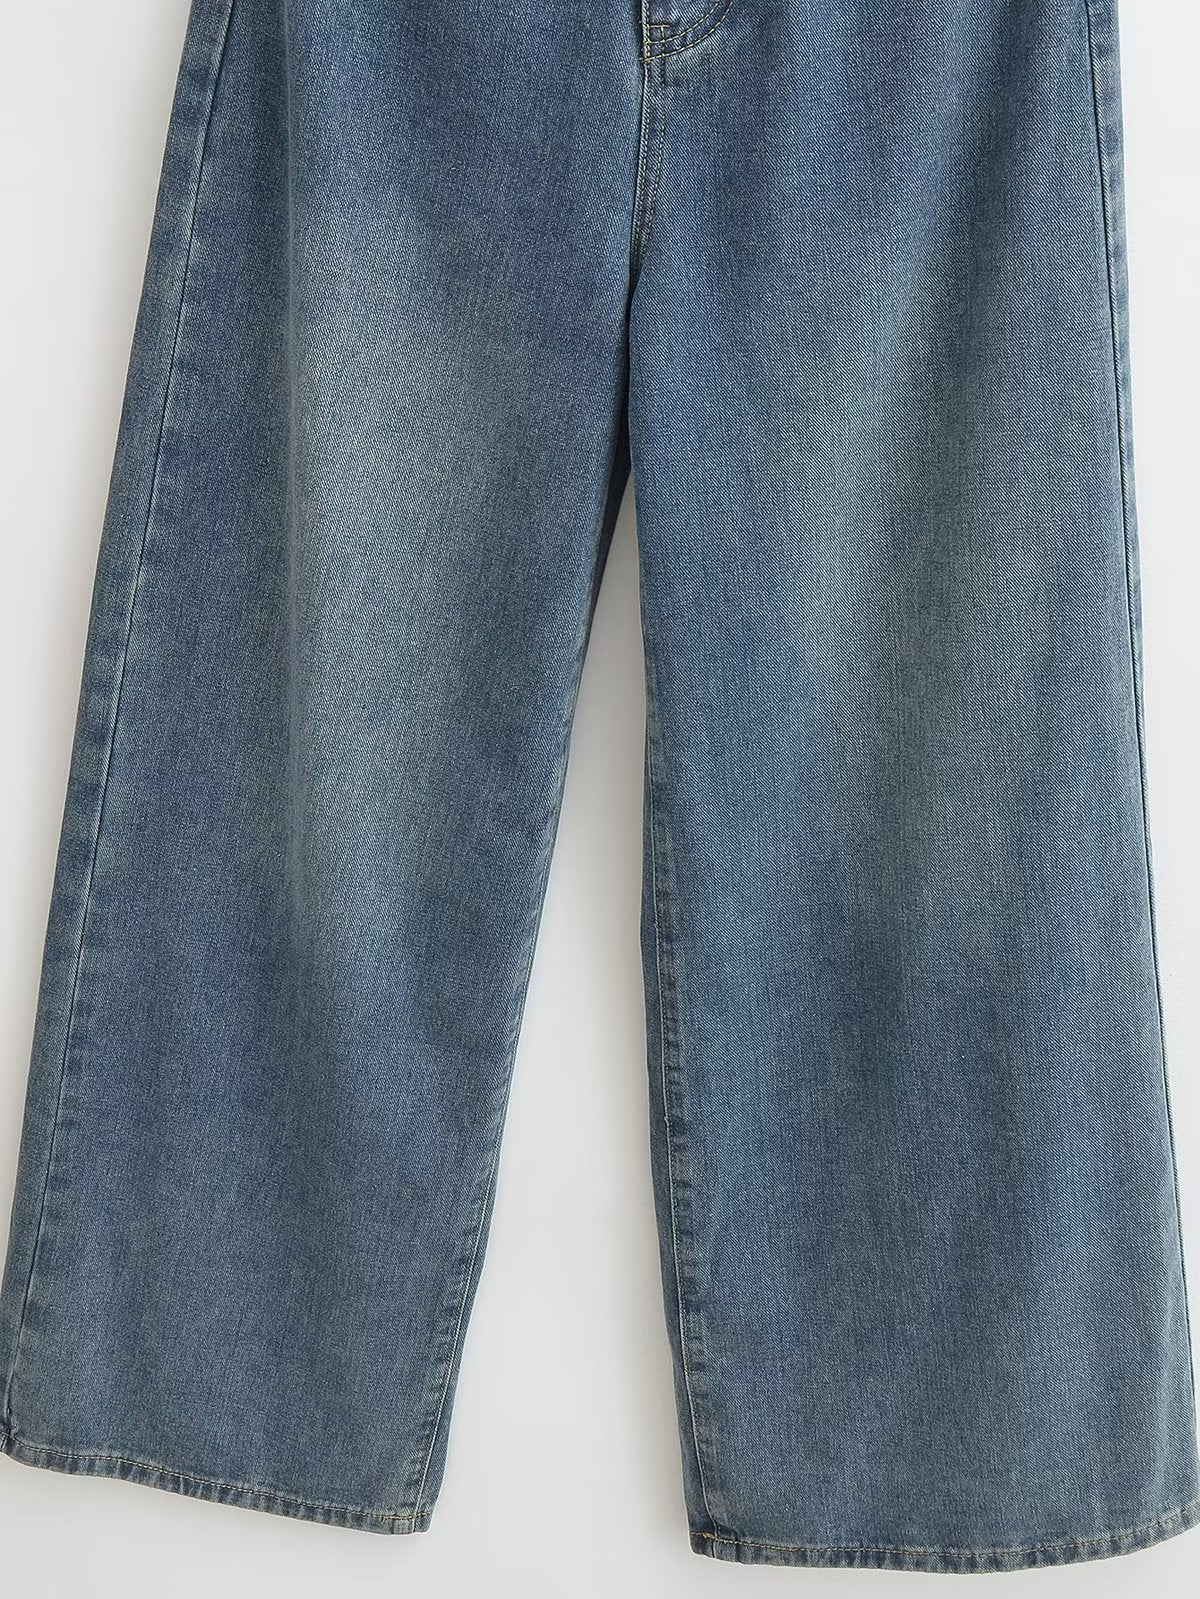 Navy Blue Jeans Belt for Women